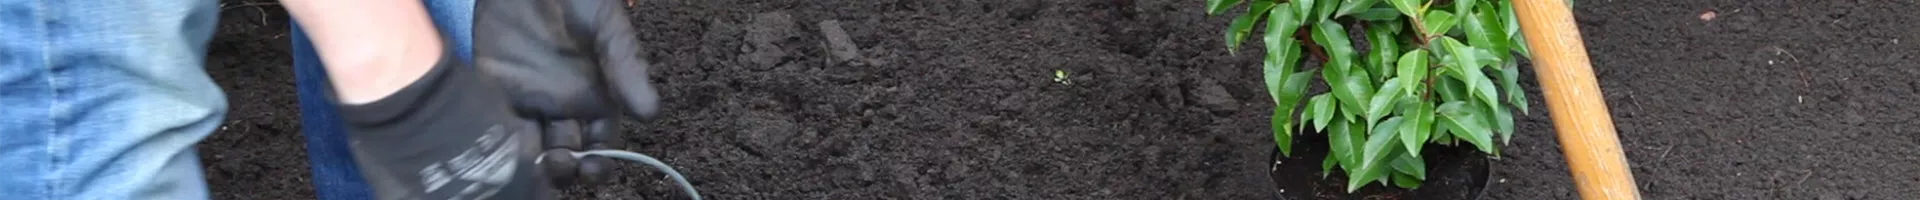 Loorbeerkirsche - Einpflanzen im Garten (thumbnail).jpg